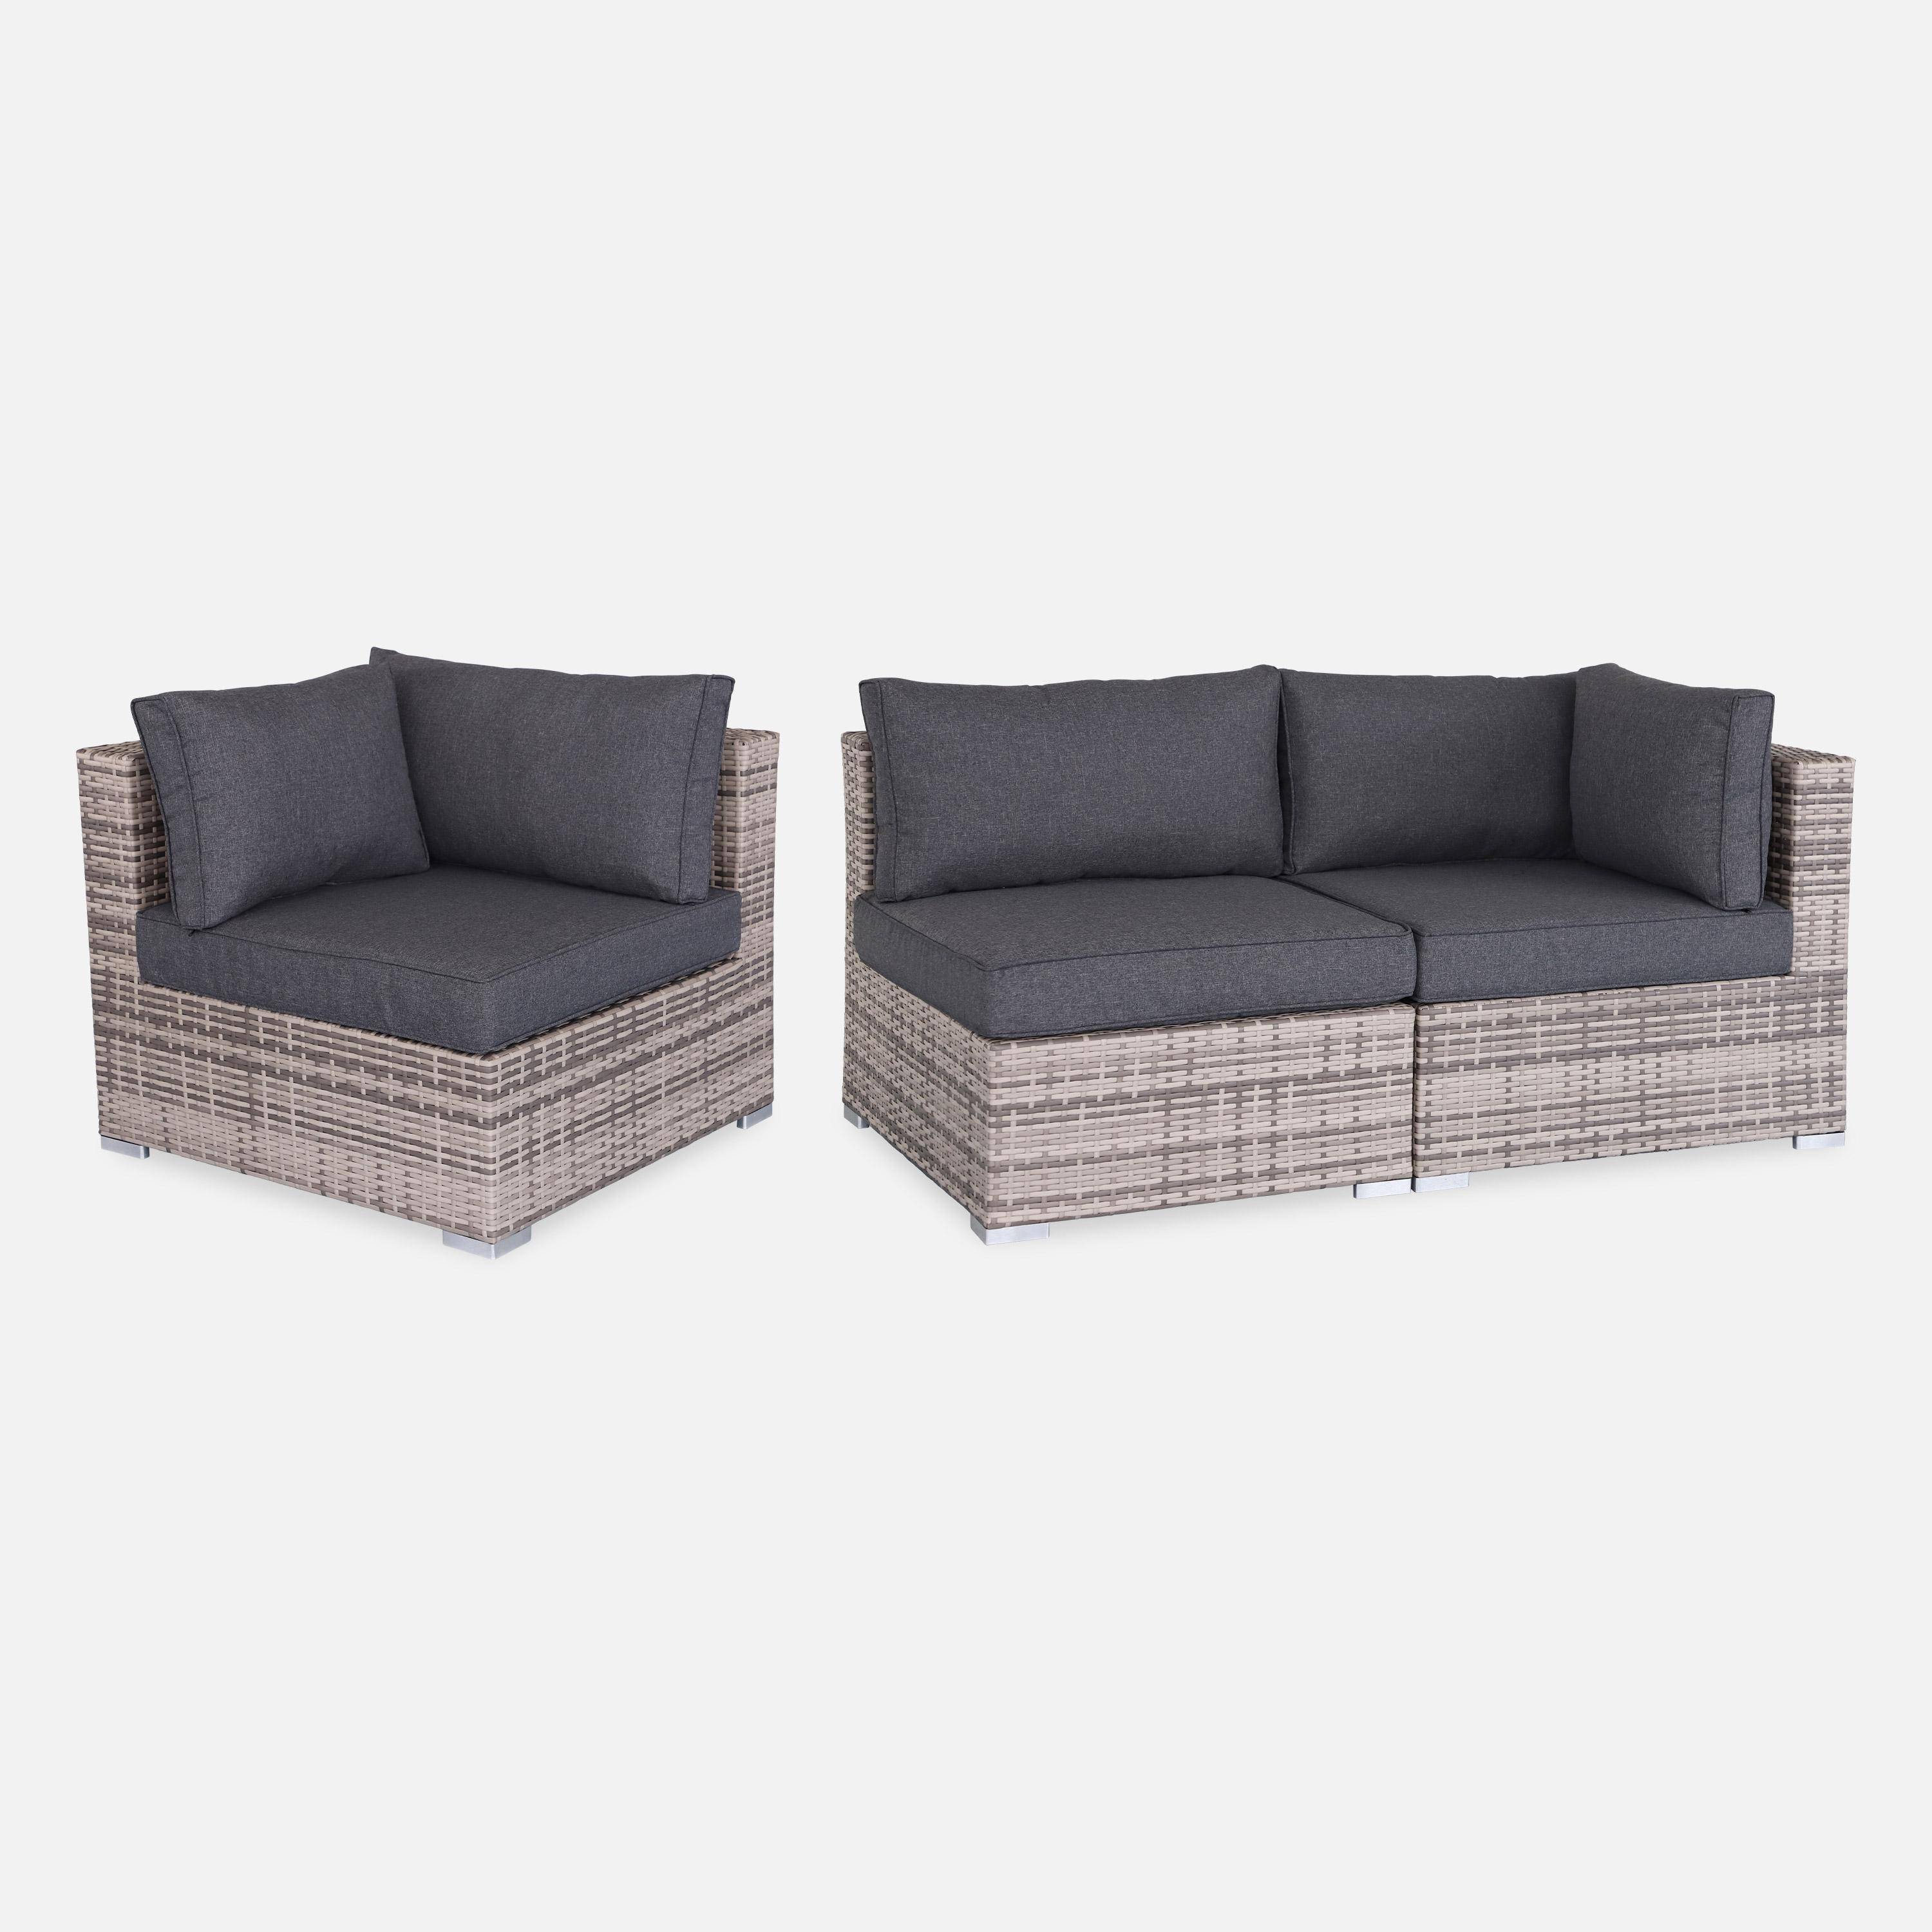 Ready assembled 14-seater premium polyrattan corner garden sofa set with coffee table, Grey,sweeek,Photo4